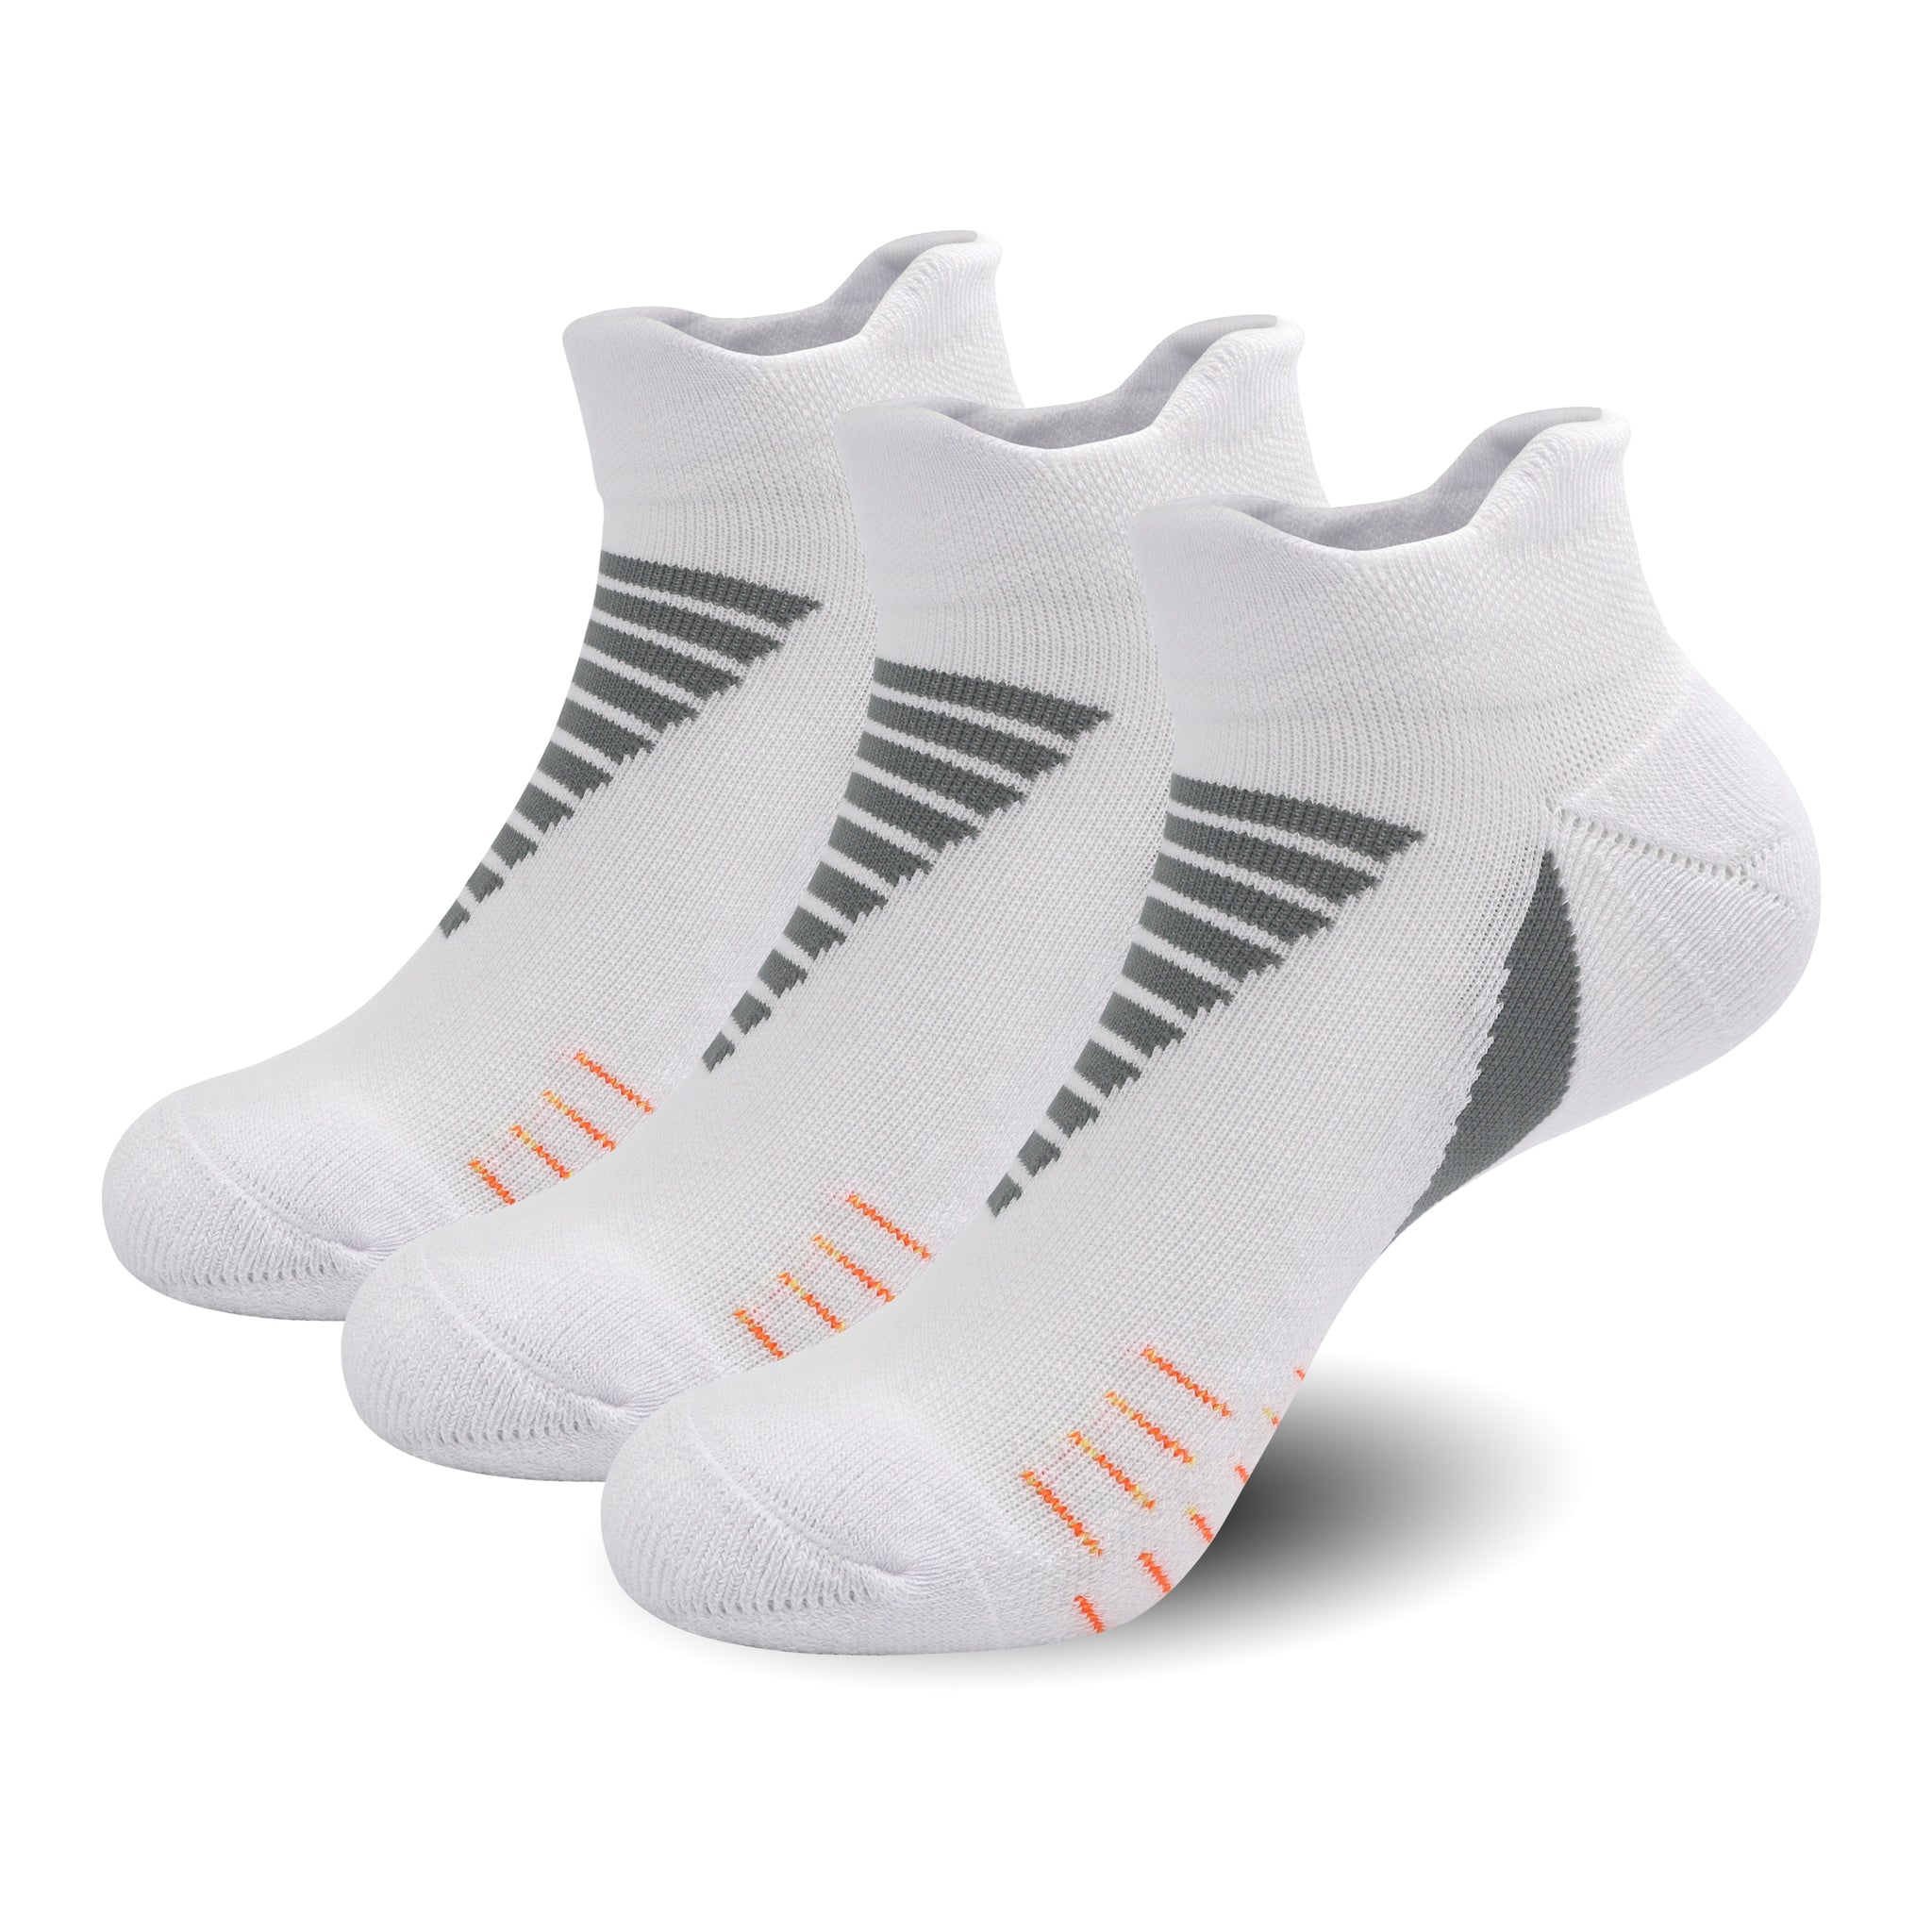 SERISIMPLE Low Cut Performance Cotton Bamboo Socks Padding Athletic Cu